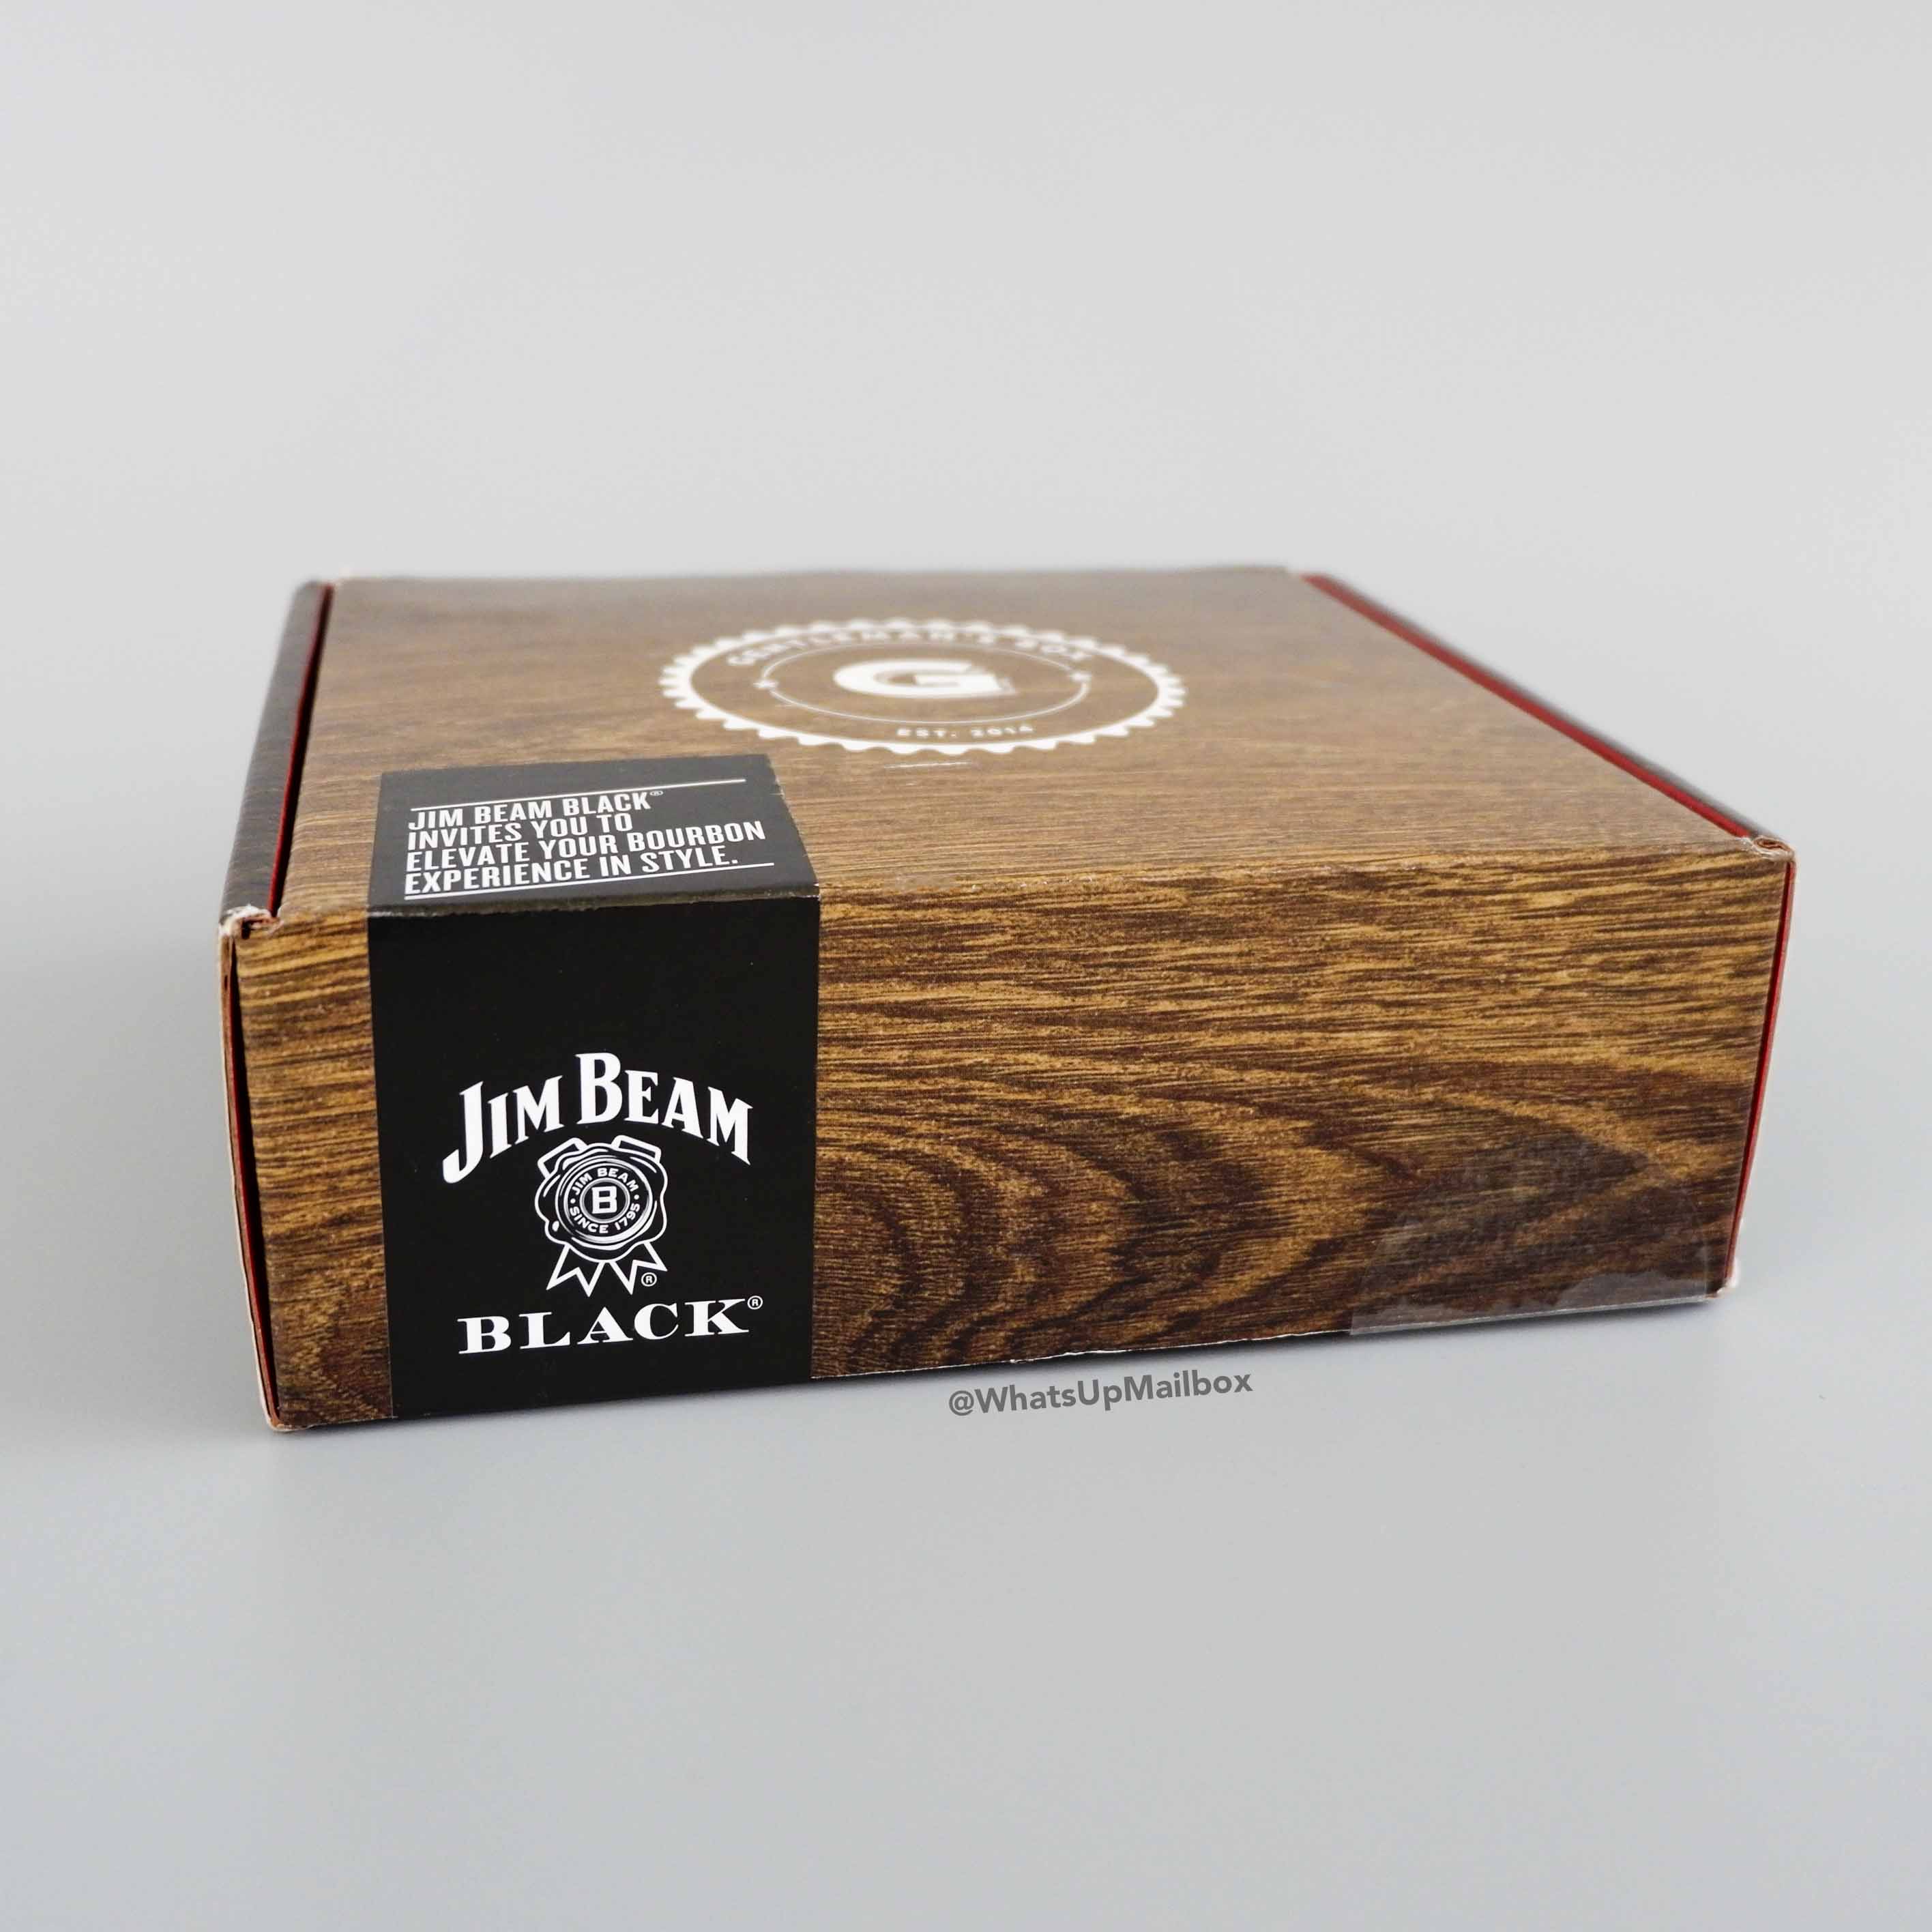 Gentleman's Box Jim Beam Black Special Edition